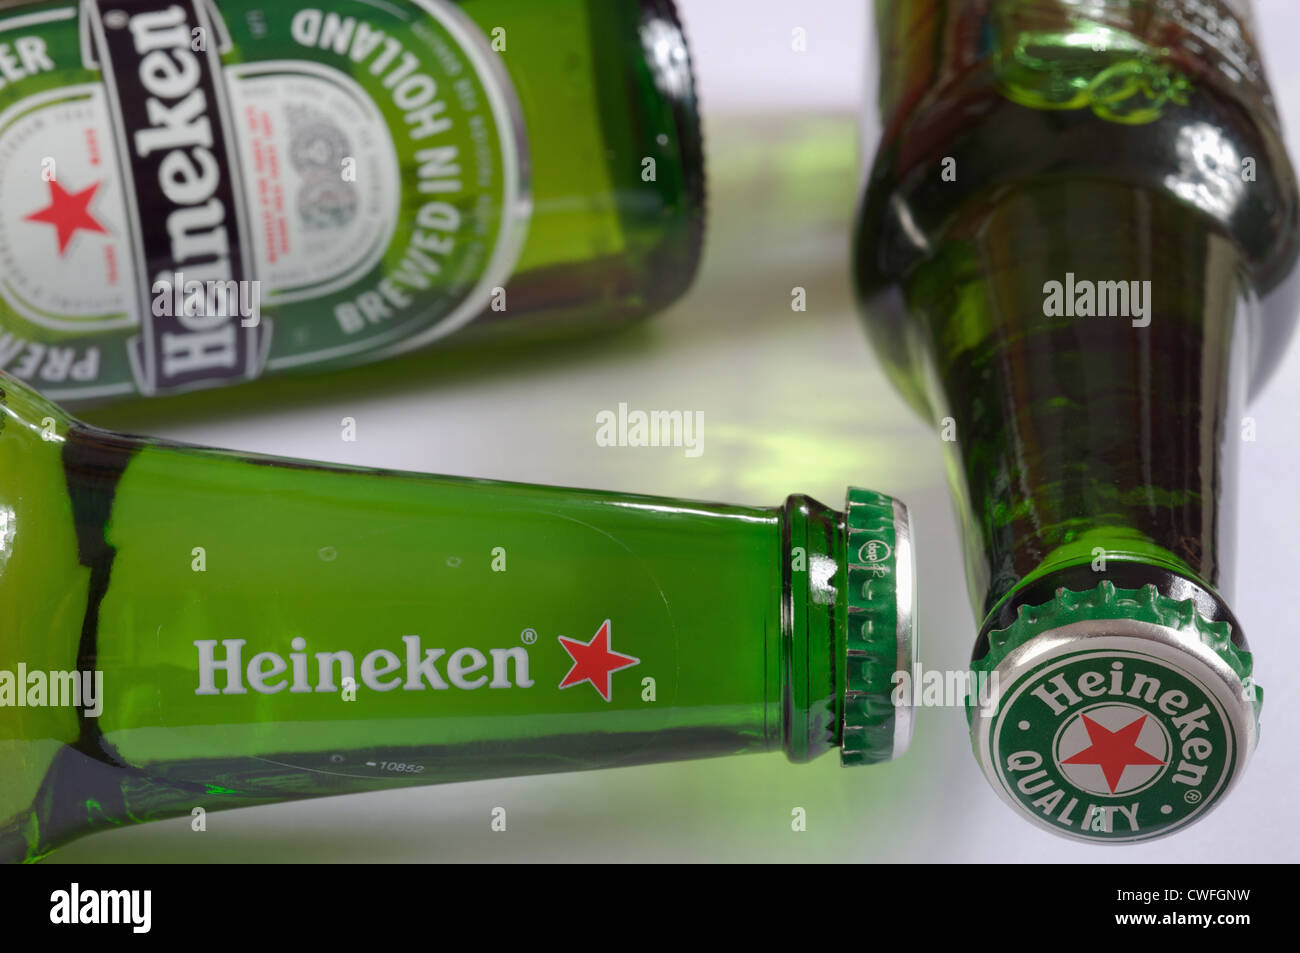 Heineken bottled beer Stock Photo